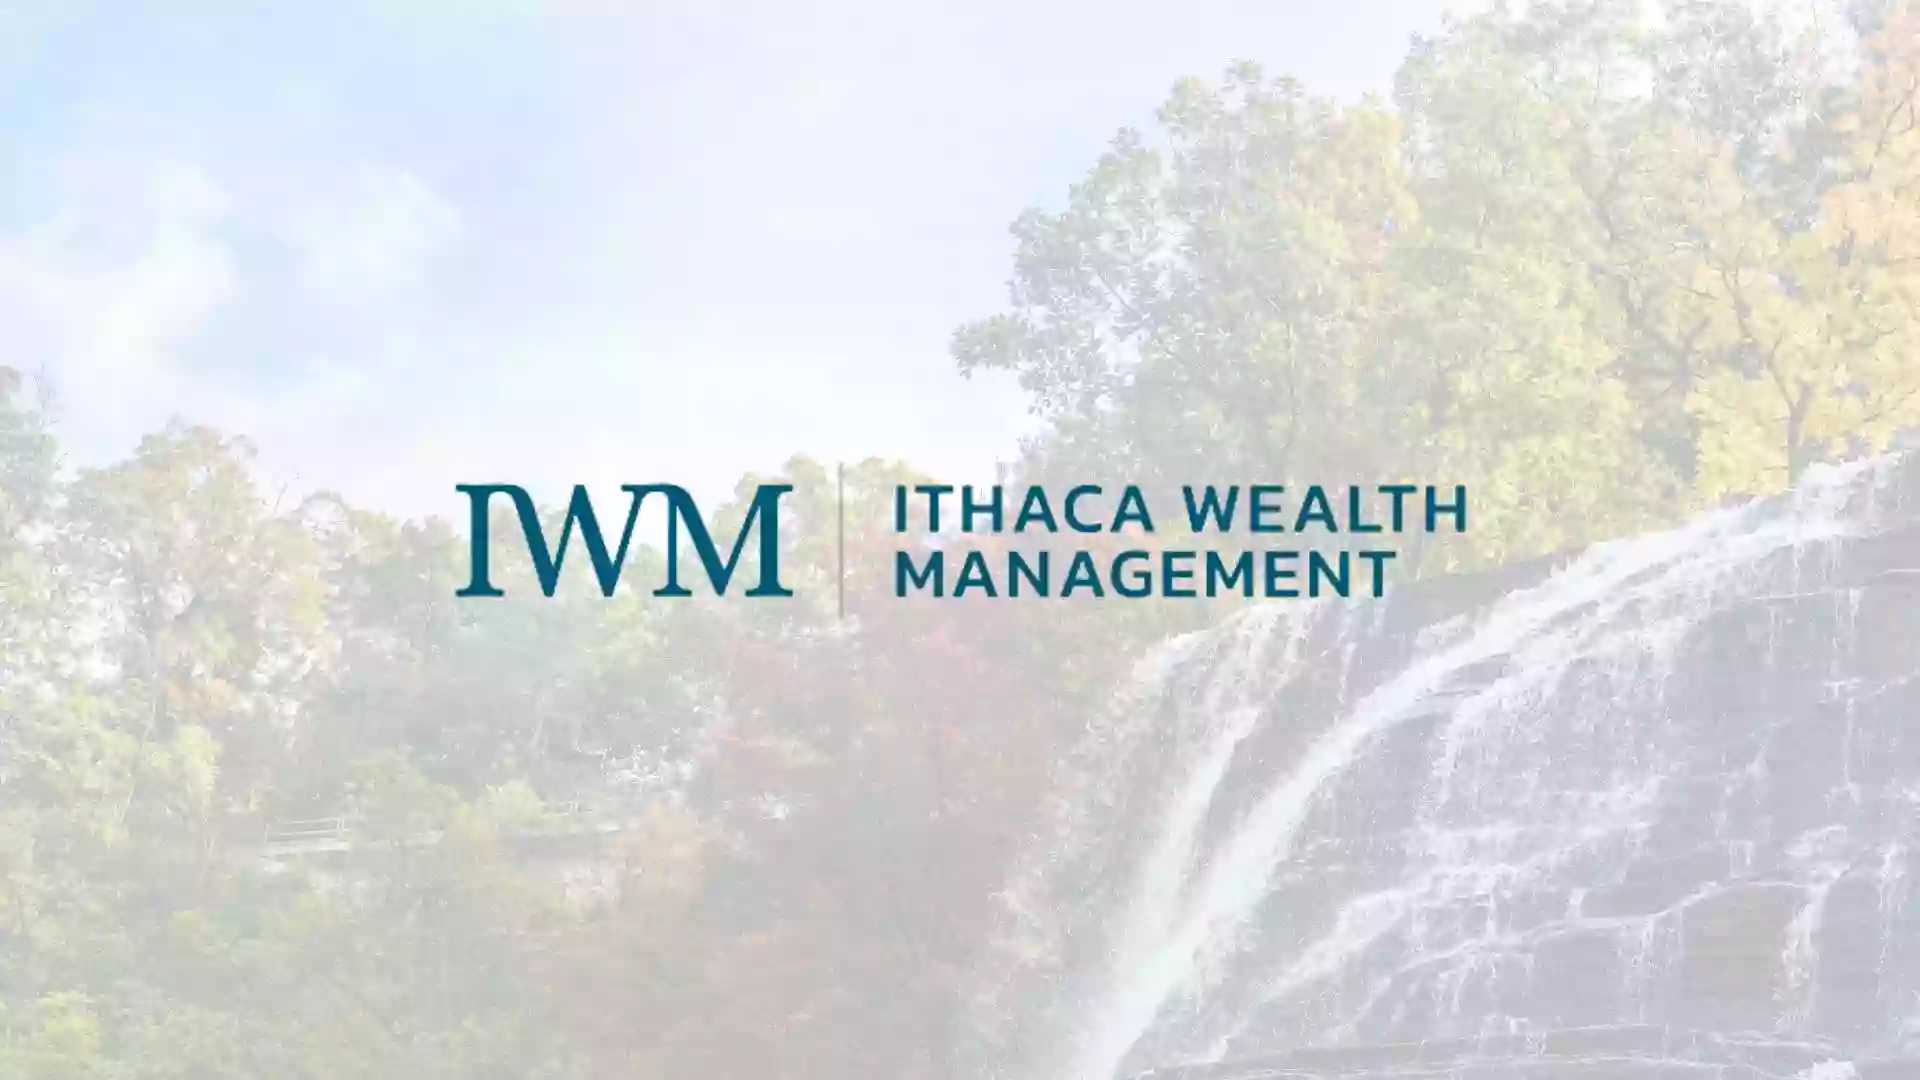 Ithaca Wealth Management